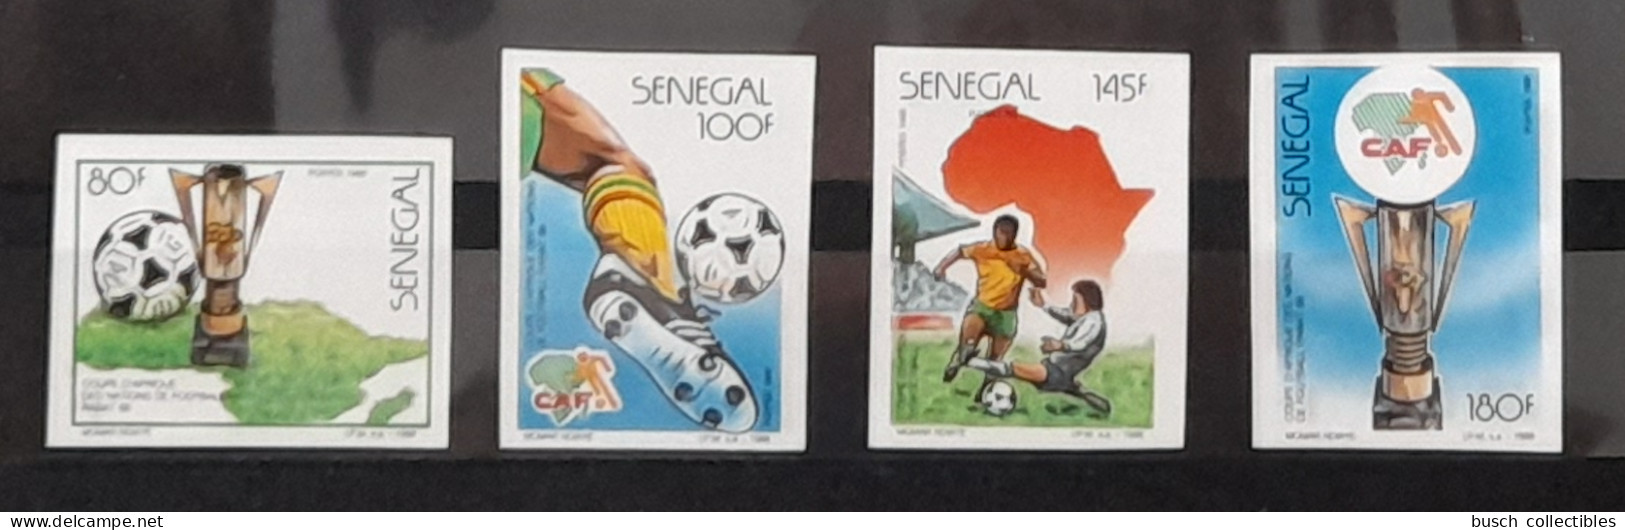 Sénégal 1988 Mi. 973 - 976 IMPERF ND Football Fußball Soccer CAF CAN Coupe D'Afrique Des Nations Rabat Maroc - Coupe D'Afrique Des Nations